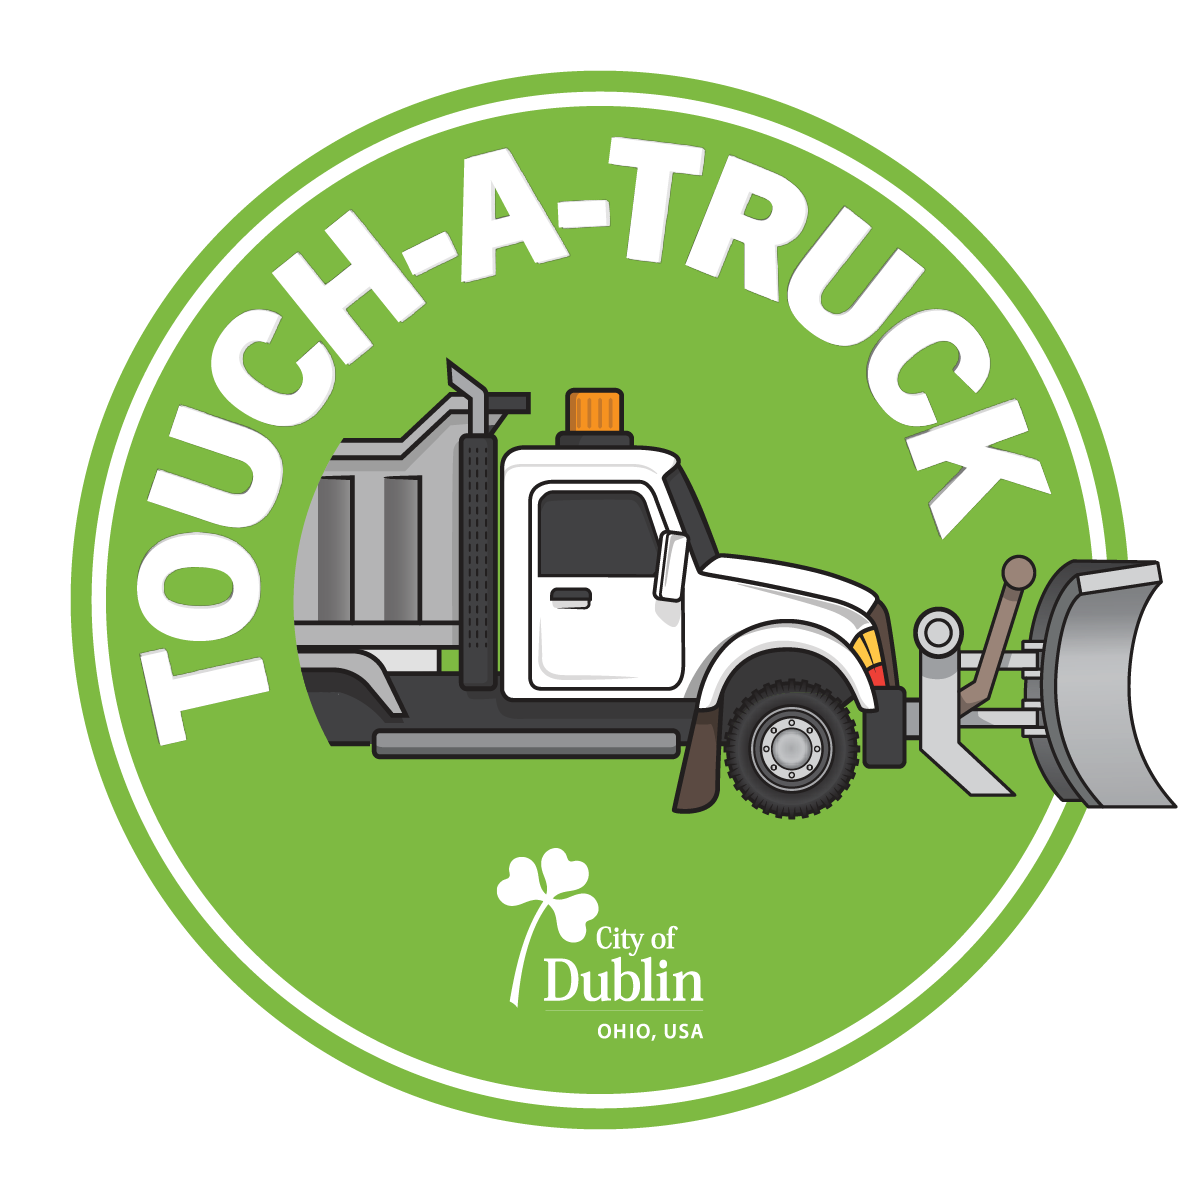 Touch a Truck City of Dublin, Ohio, USA